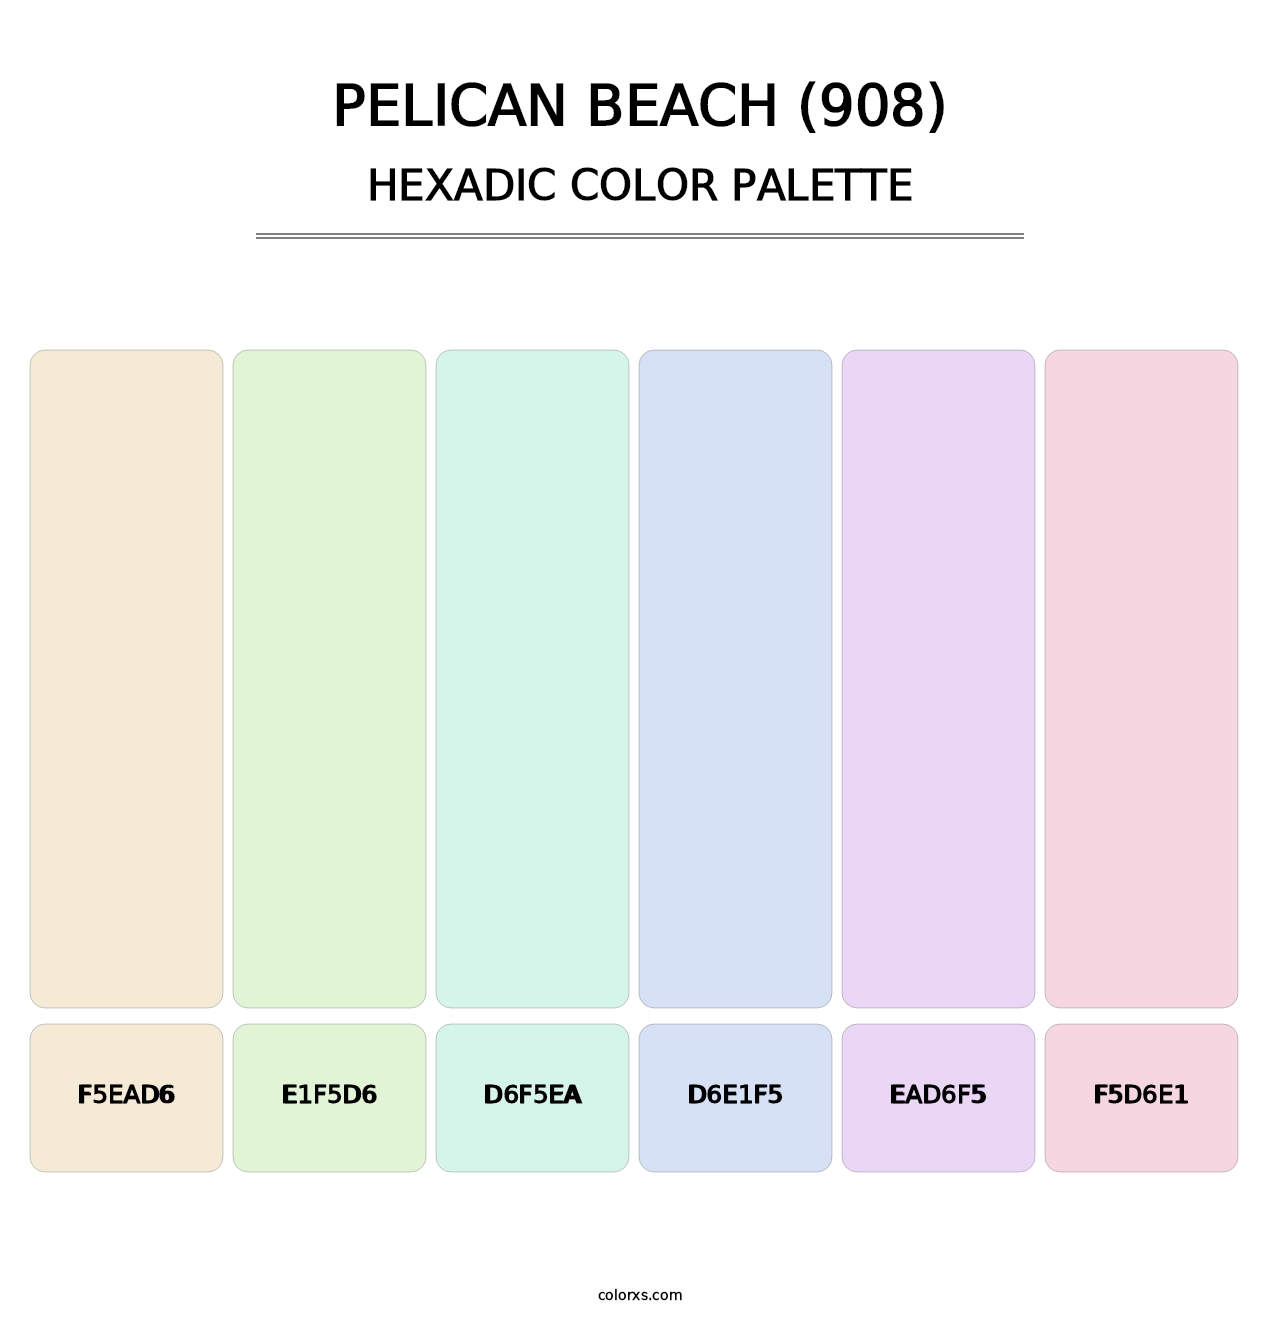 Pelican Beach (908) - Hexadic Color Palette